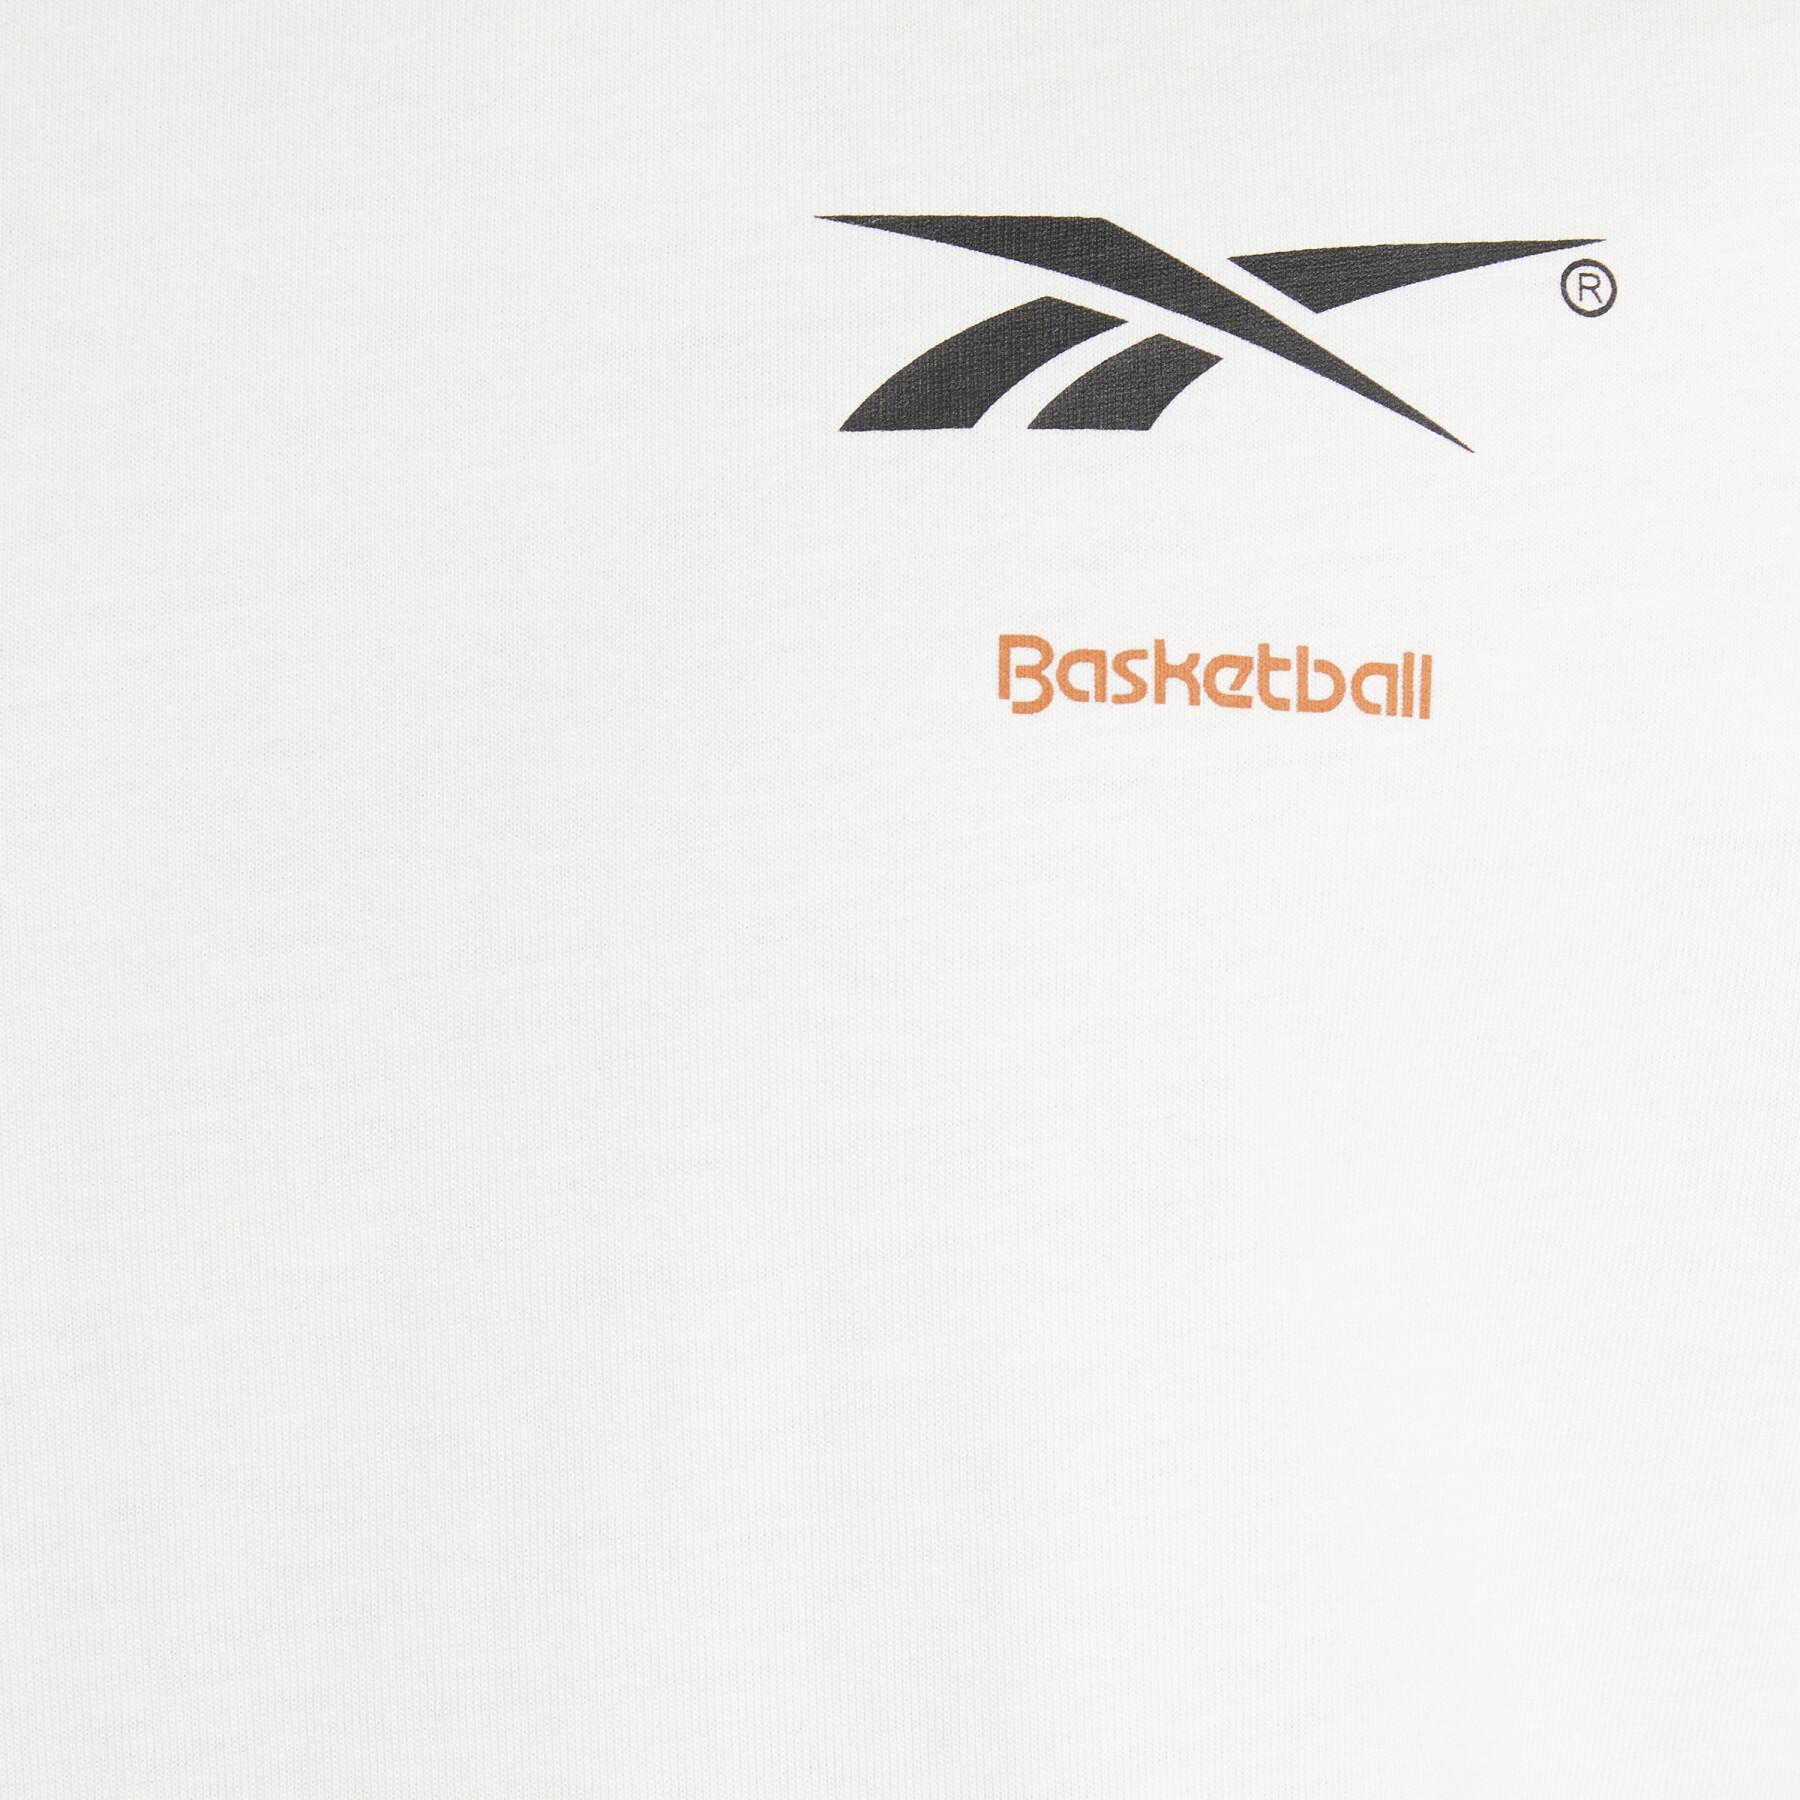 Camiseta court Reebok Basketball